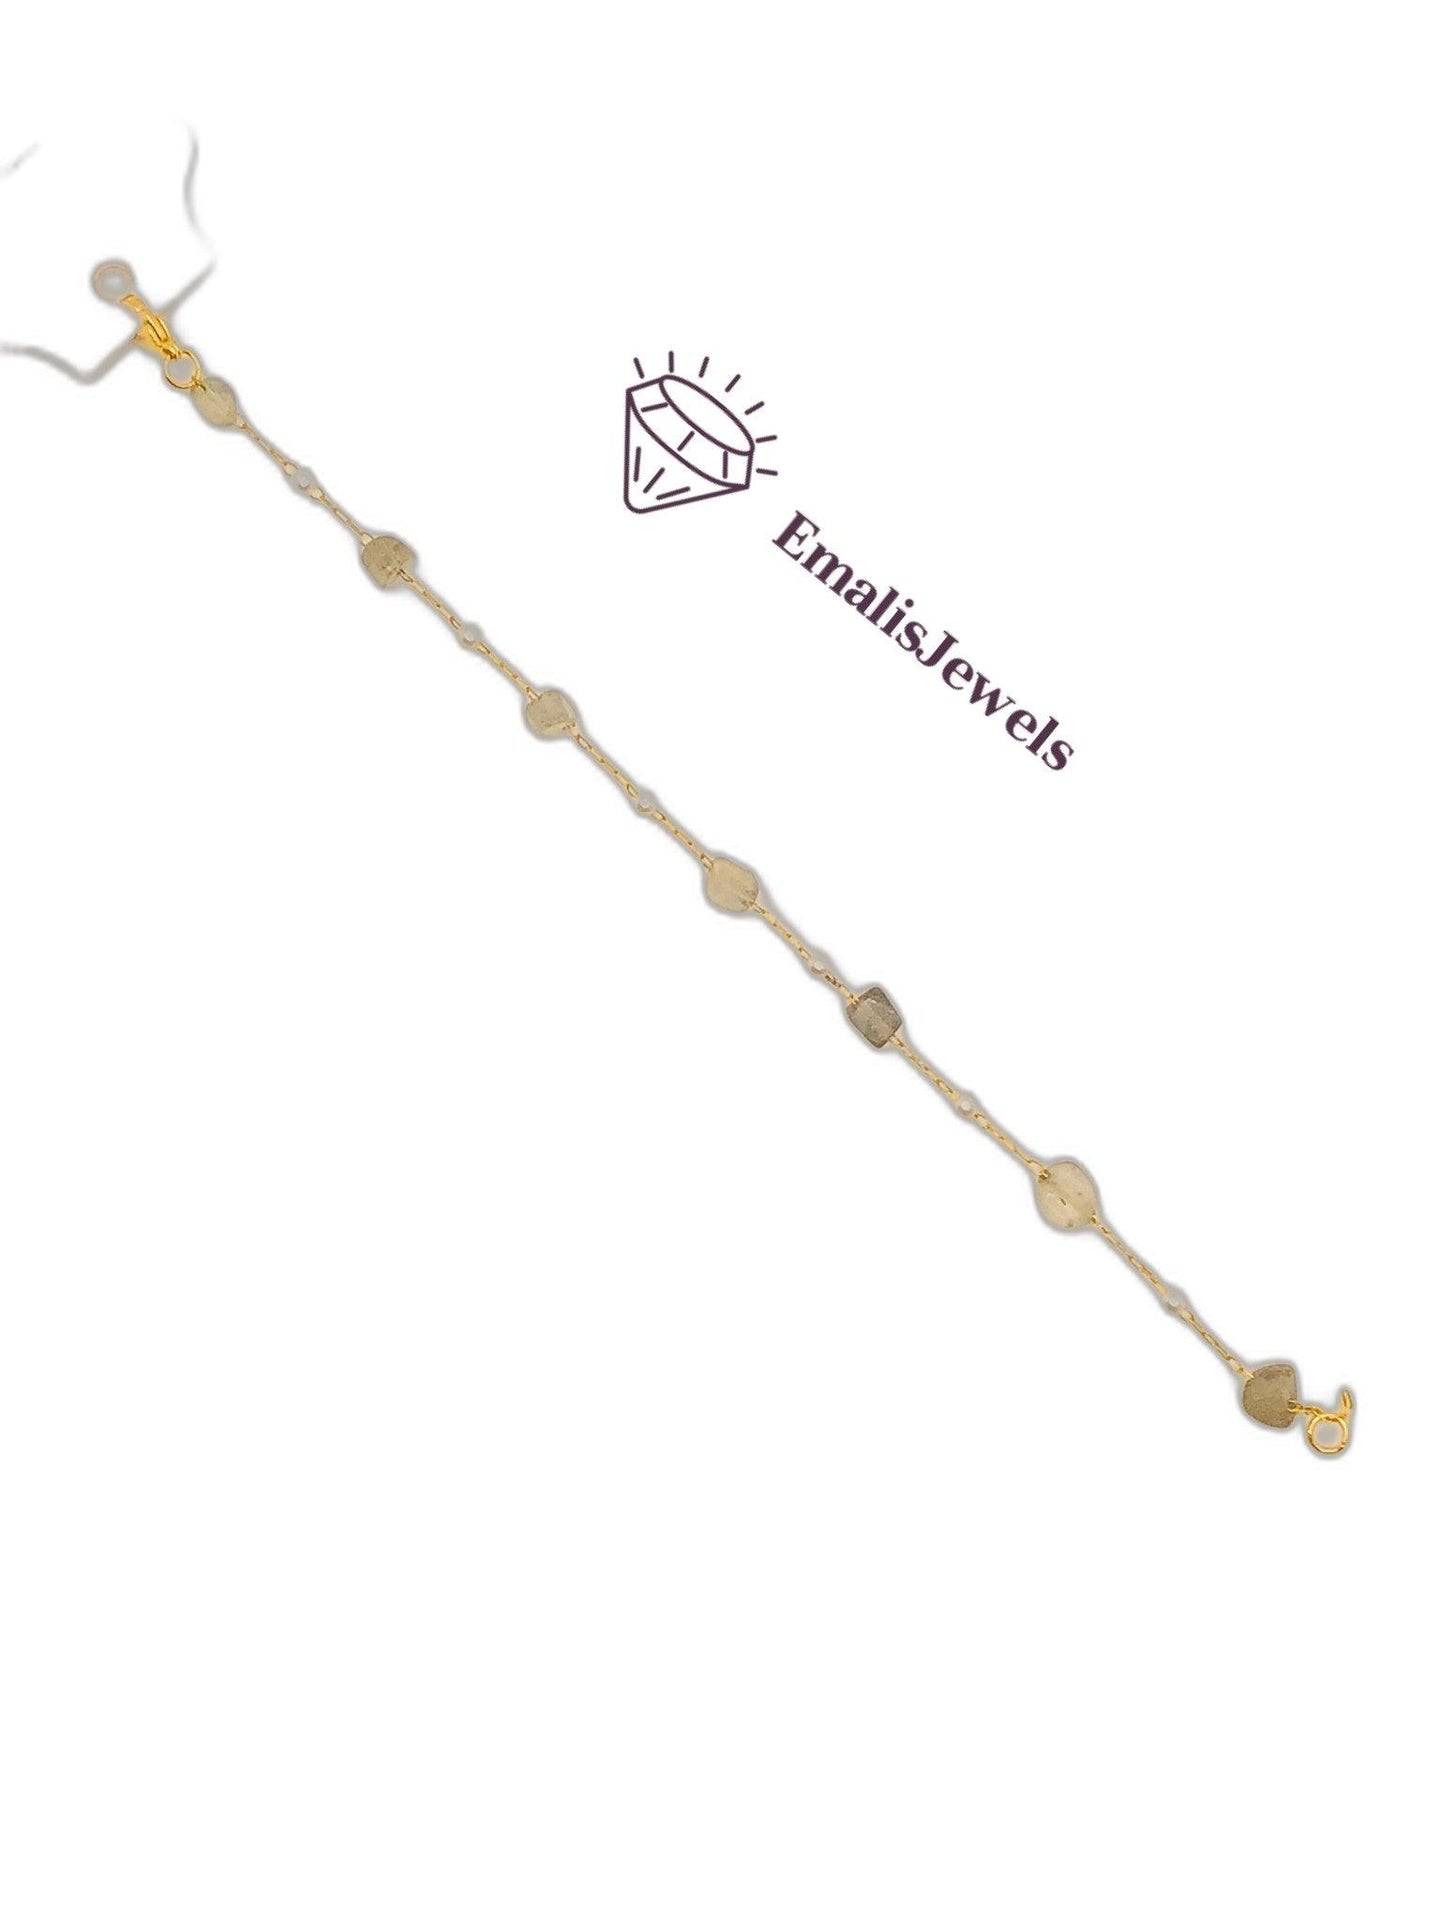 Handmade Stone Bracelets with Stainless Steel Gold overlay Chain - PremiumBrandGoods